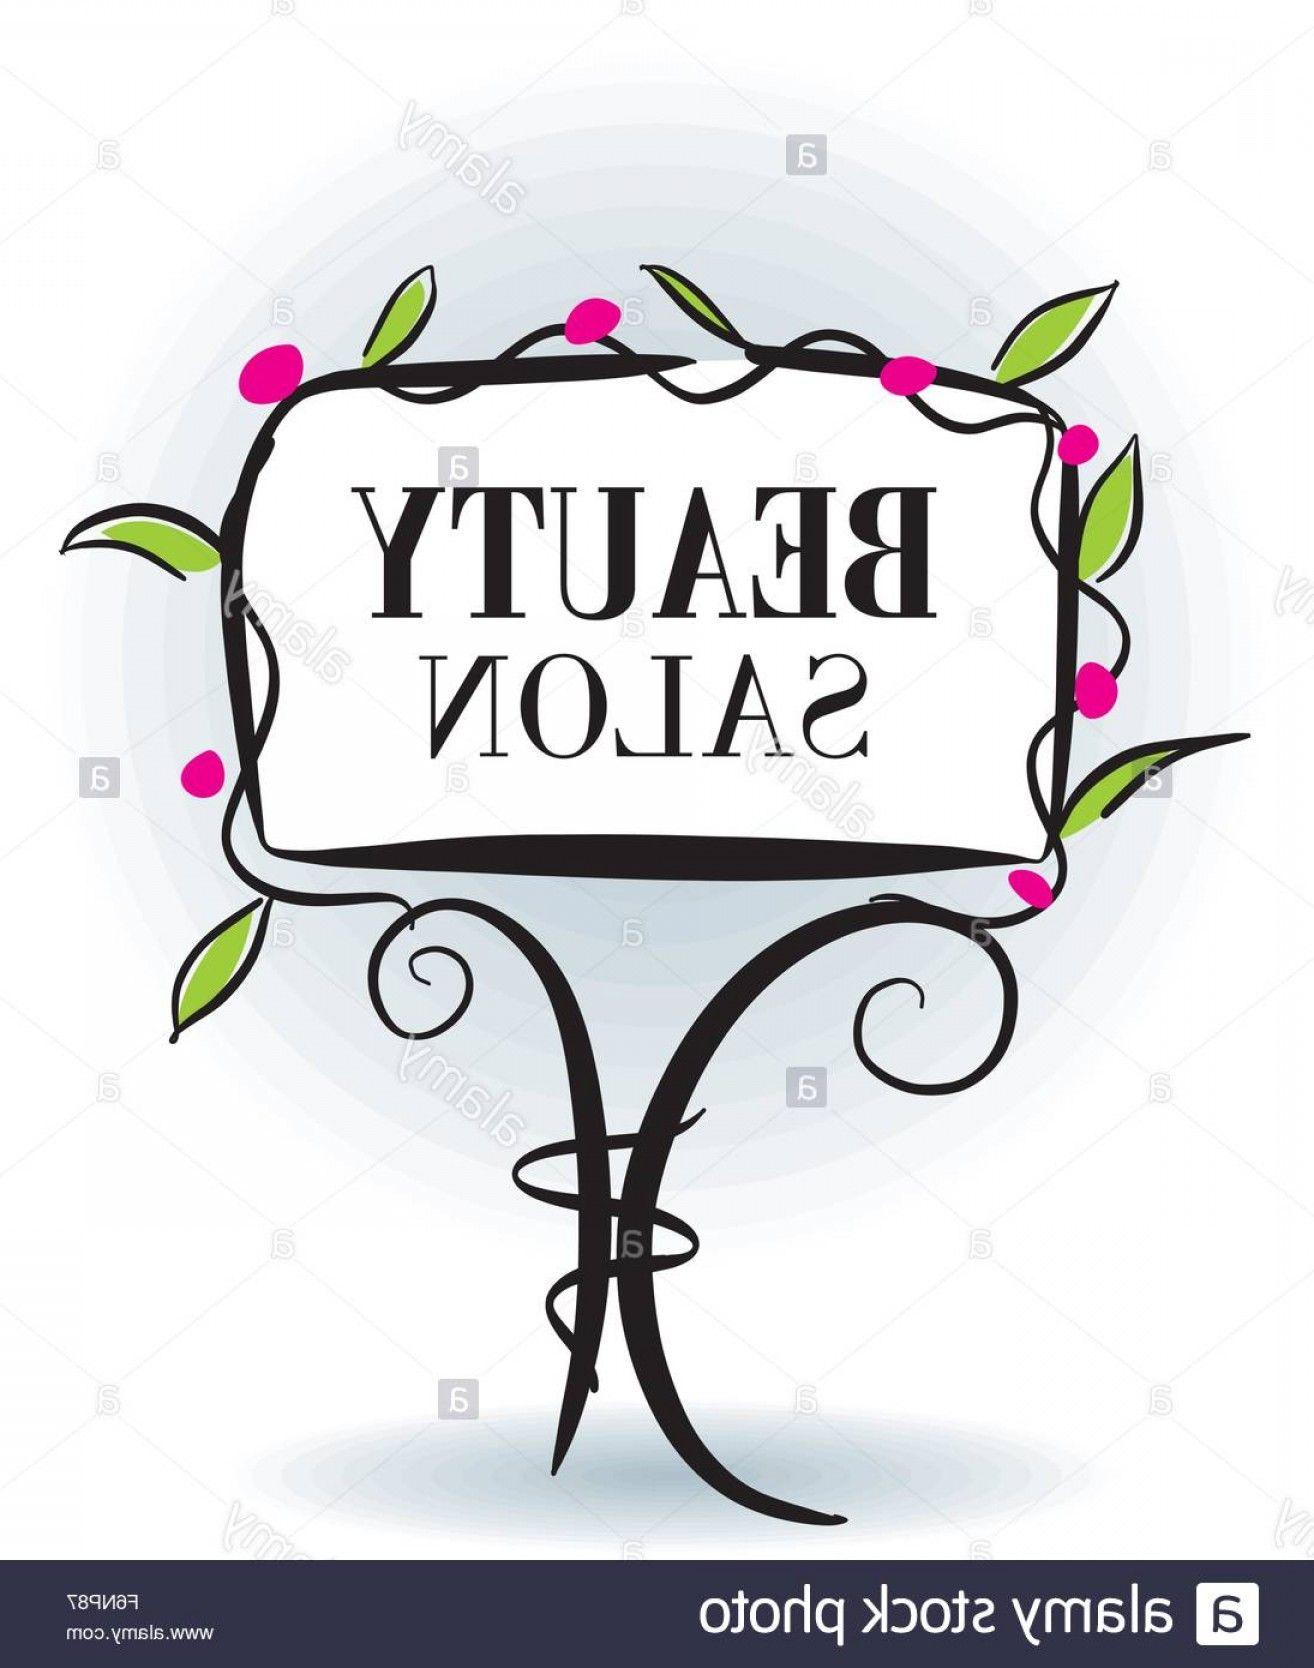 Ulta Logo - Stock Photo Logo Beauty Salon | LaztTweet